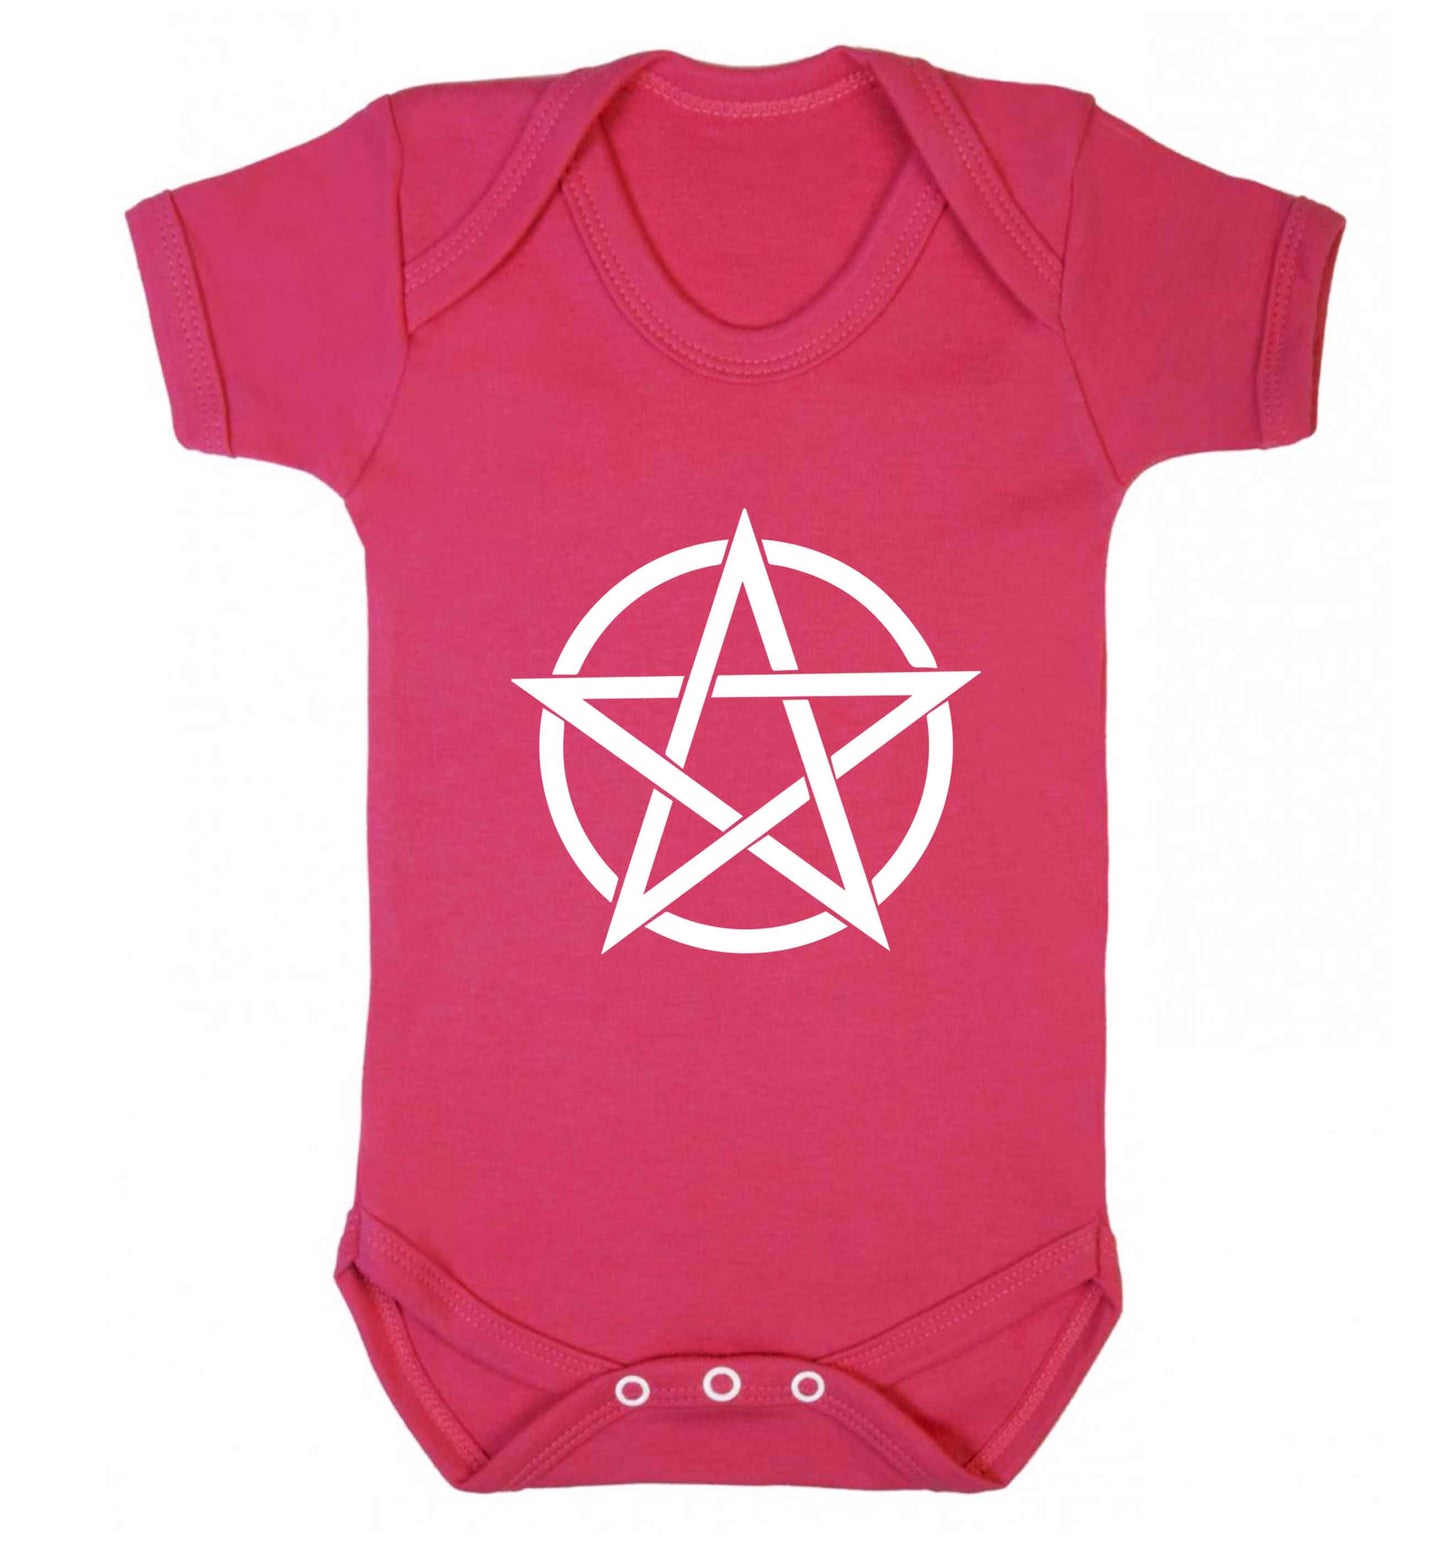 Pentagram symbol baby vest dark pink 18-24 months